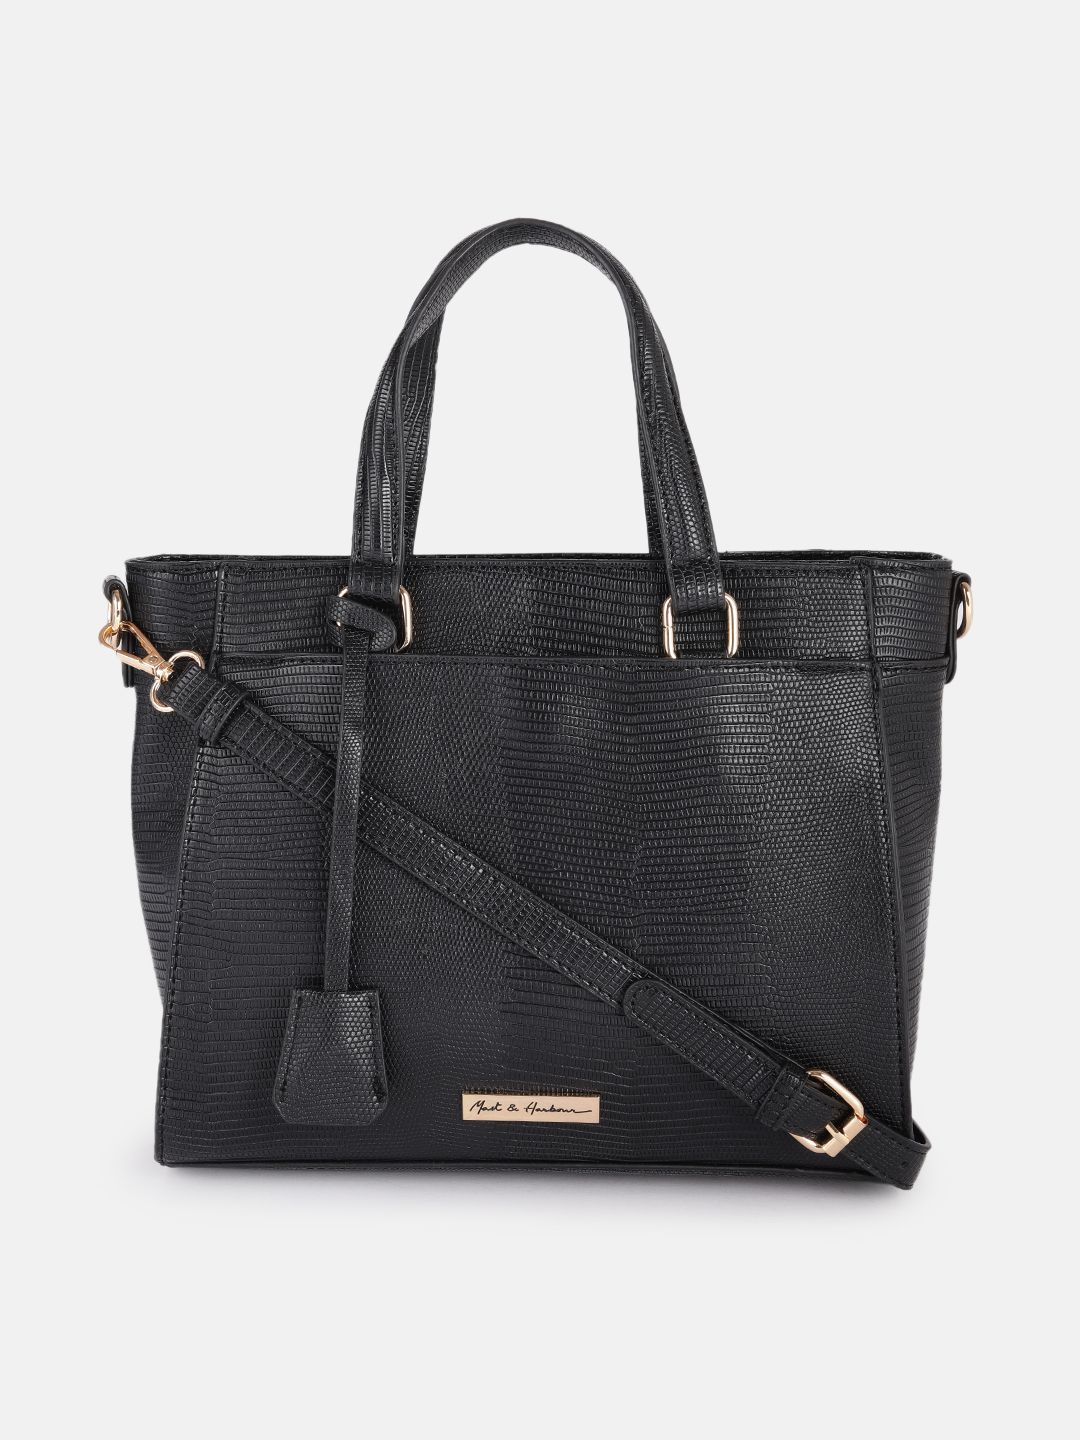 Mast & Harbour Black Textured Shoulder Bag Price in India